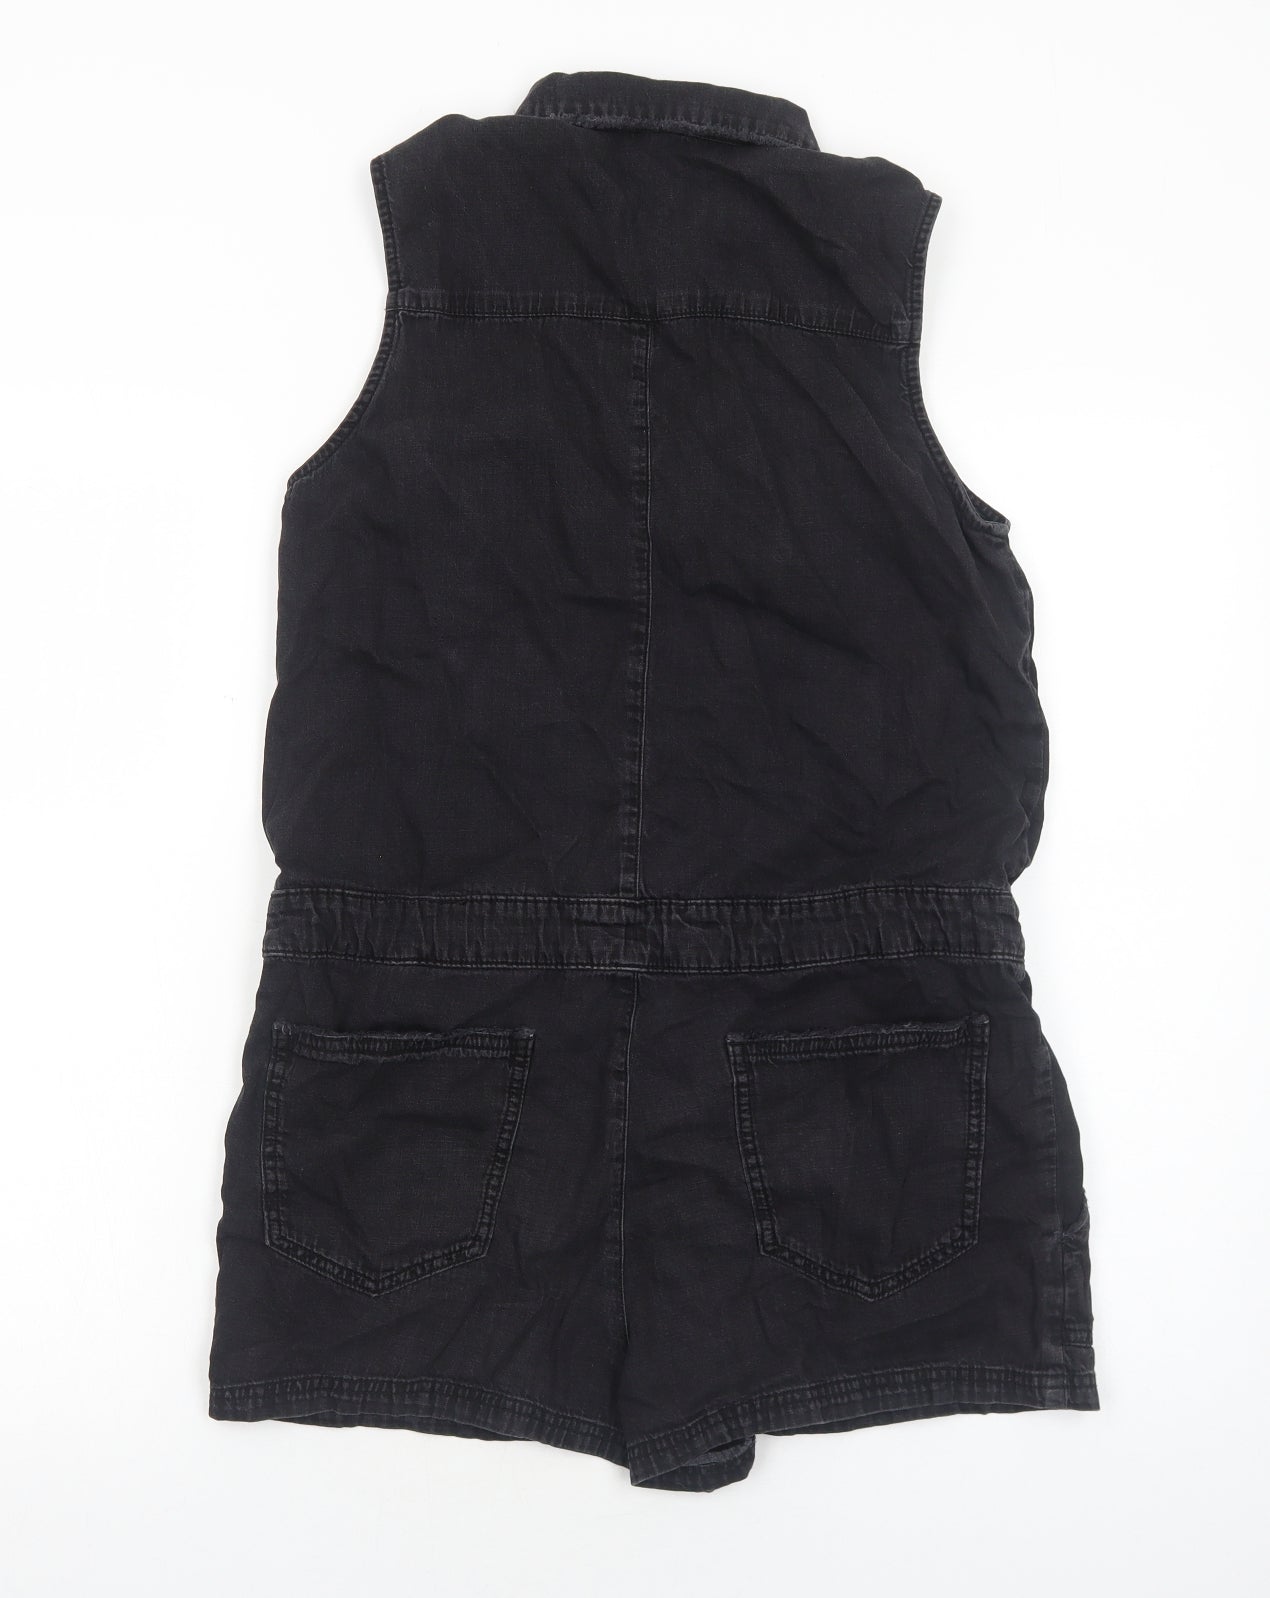 H&M Womens Black Cotton Playsuit One-Piece Size 8 Snap - Drawstring Waist